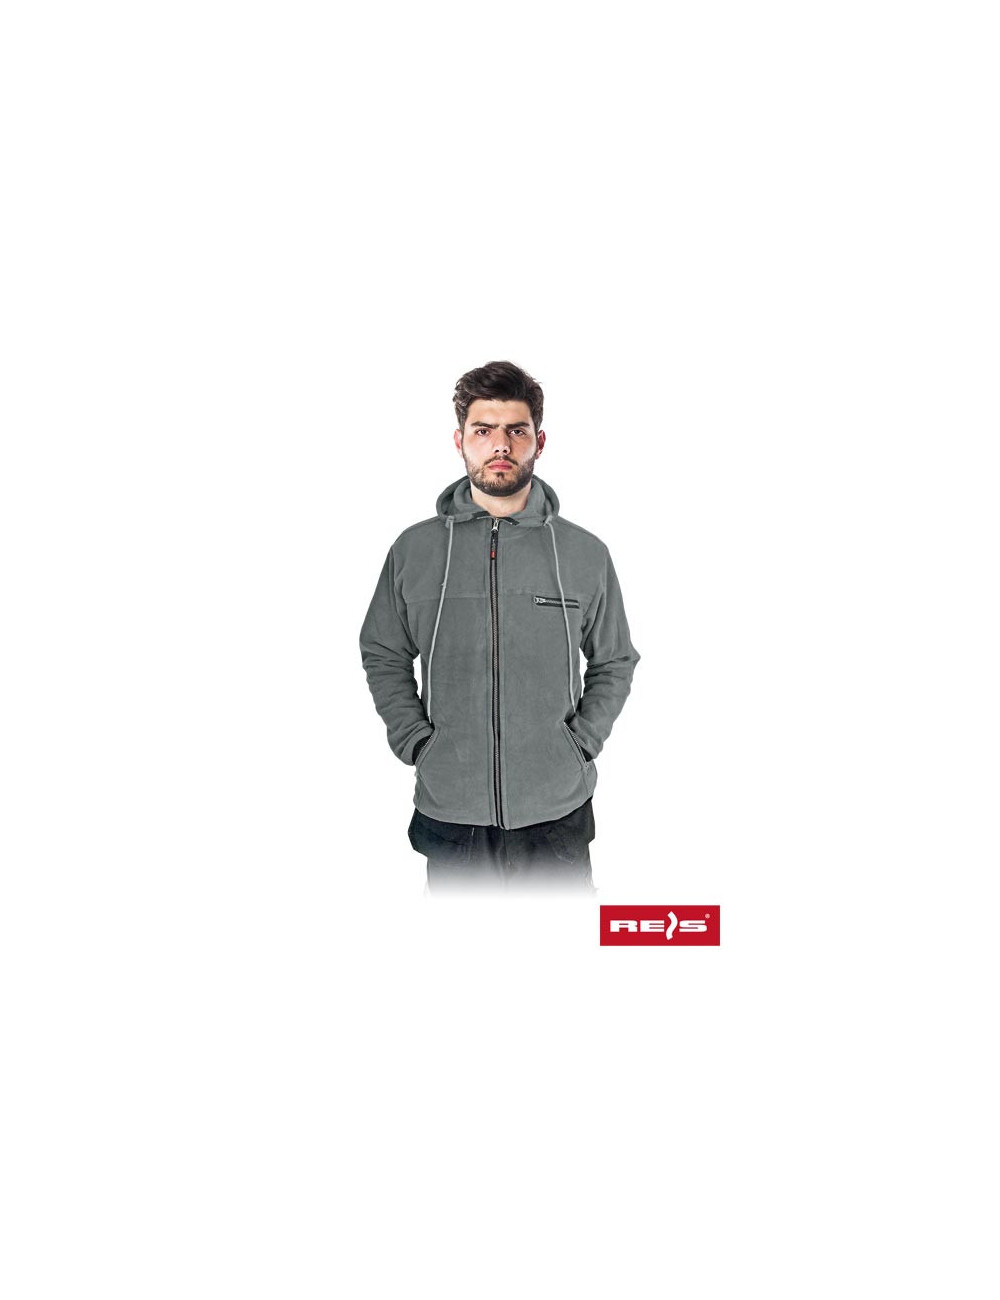 Schutz-Fleece-Sweatshirt mit Polar-Kapuze, Grau/Stahl Reis